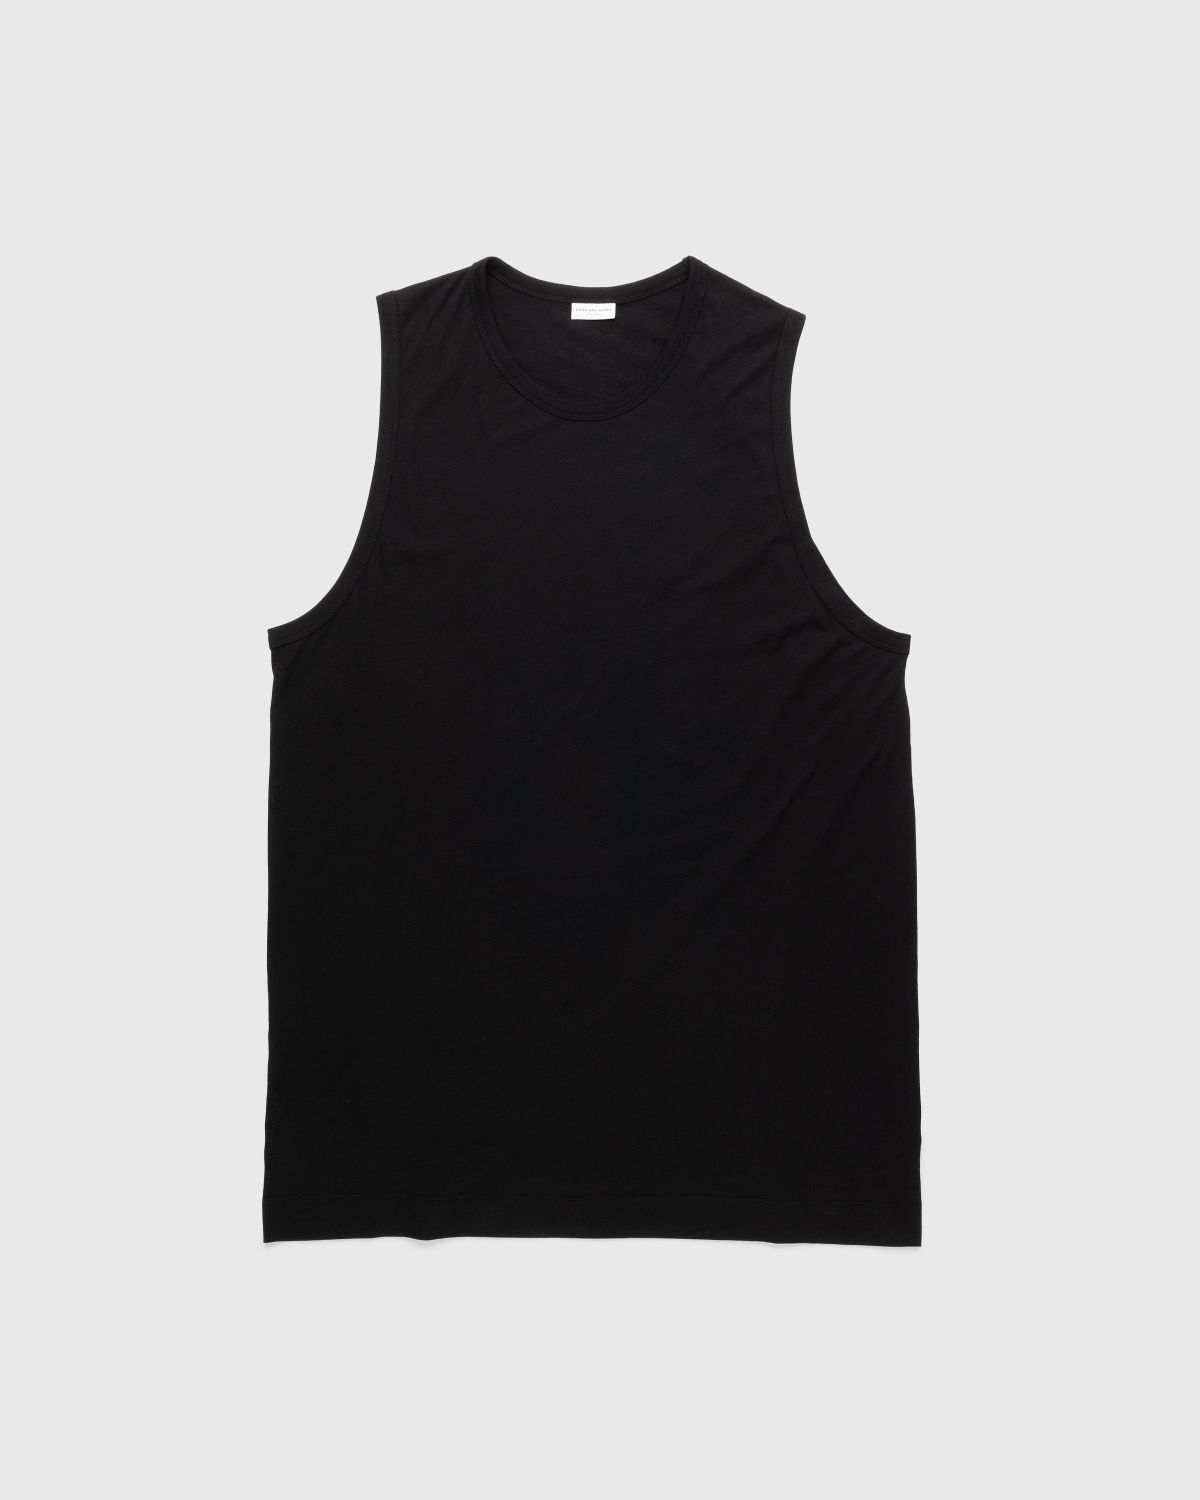 Dries van Noten – Hanator Sleeveless T-Shirt Black - Tops - Black - Image 1